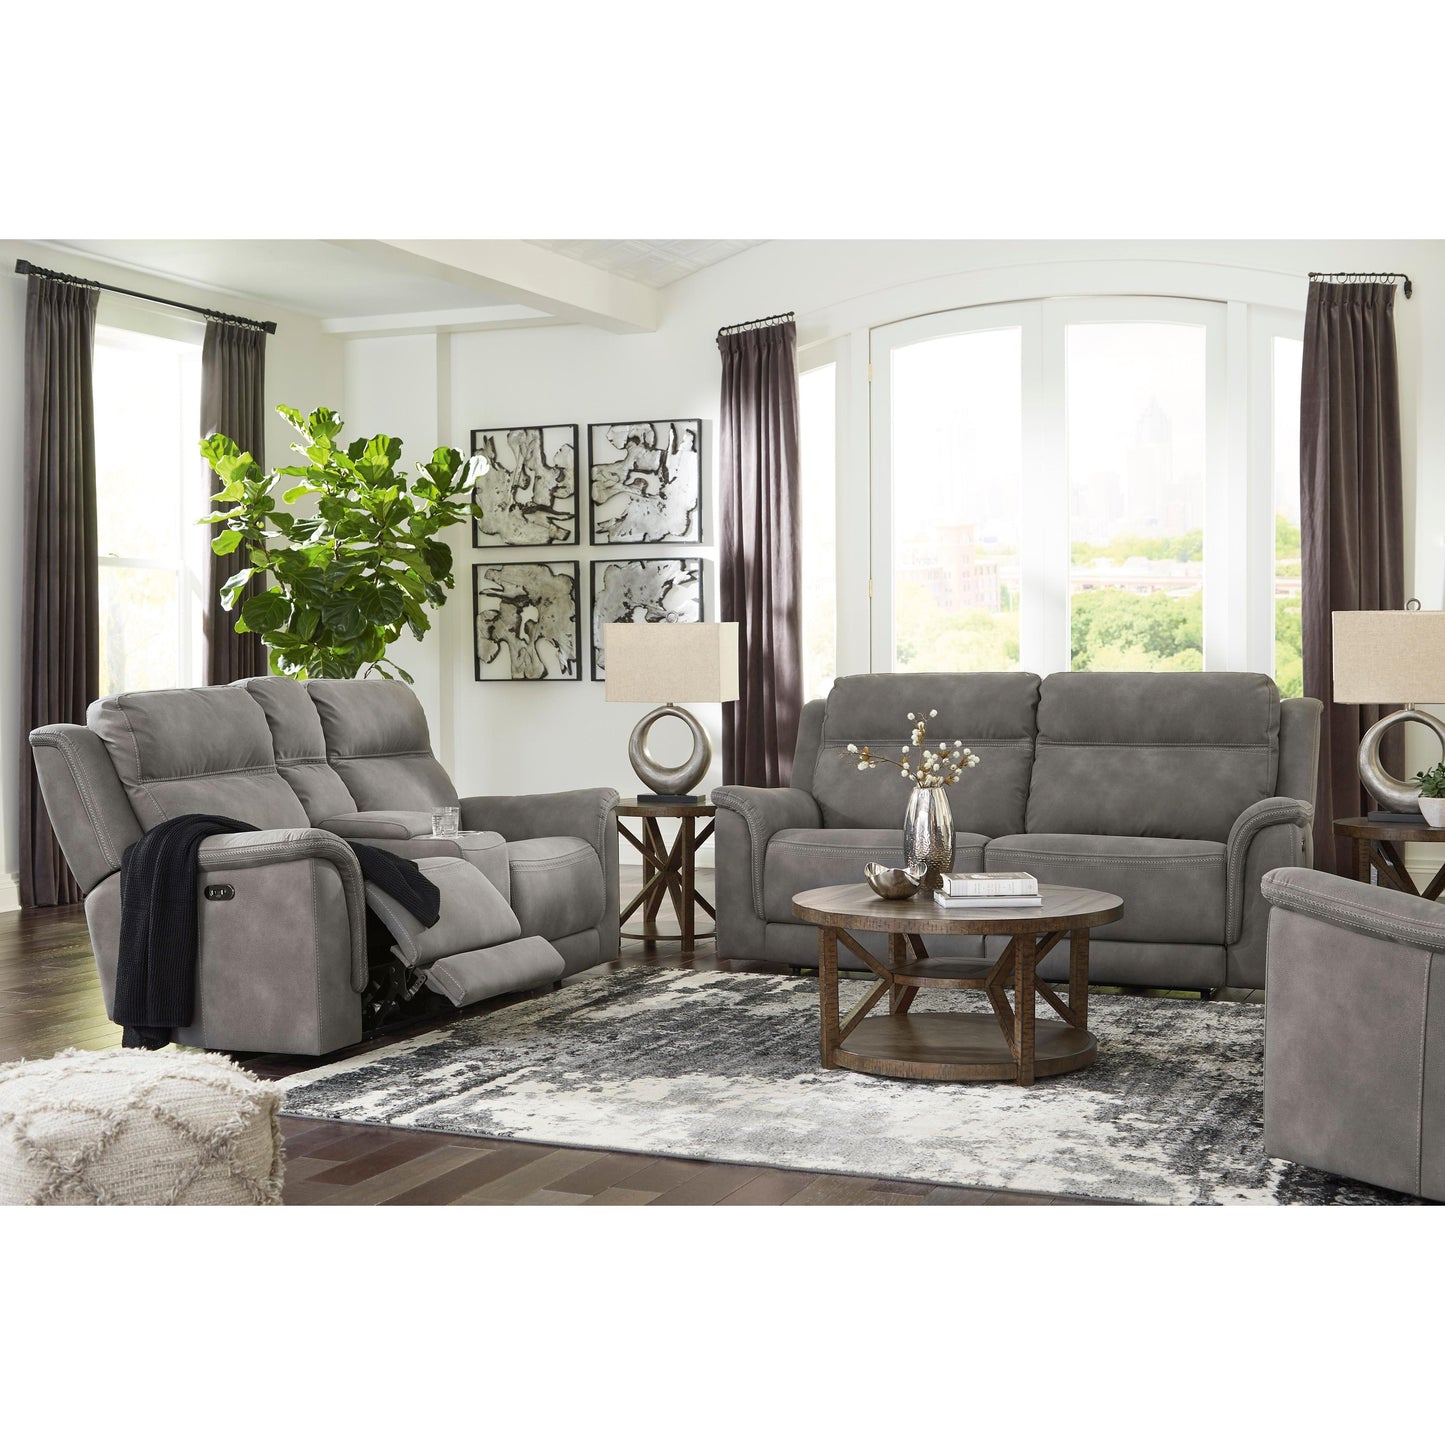 Signature Design by Ashley Next-Gen Durapella 59301U1 2 pc Power Reclining Living Room Set IMAGE 1